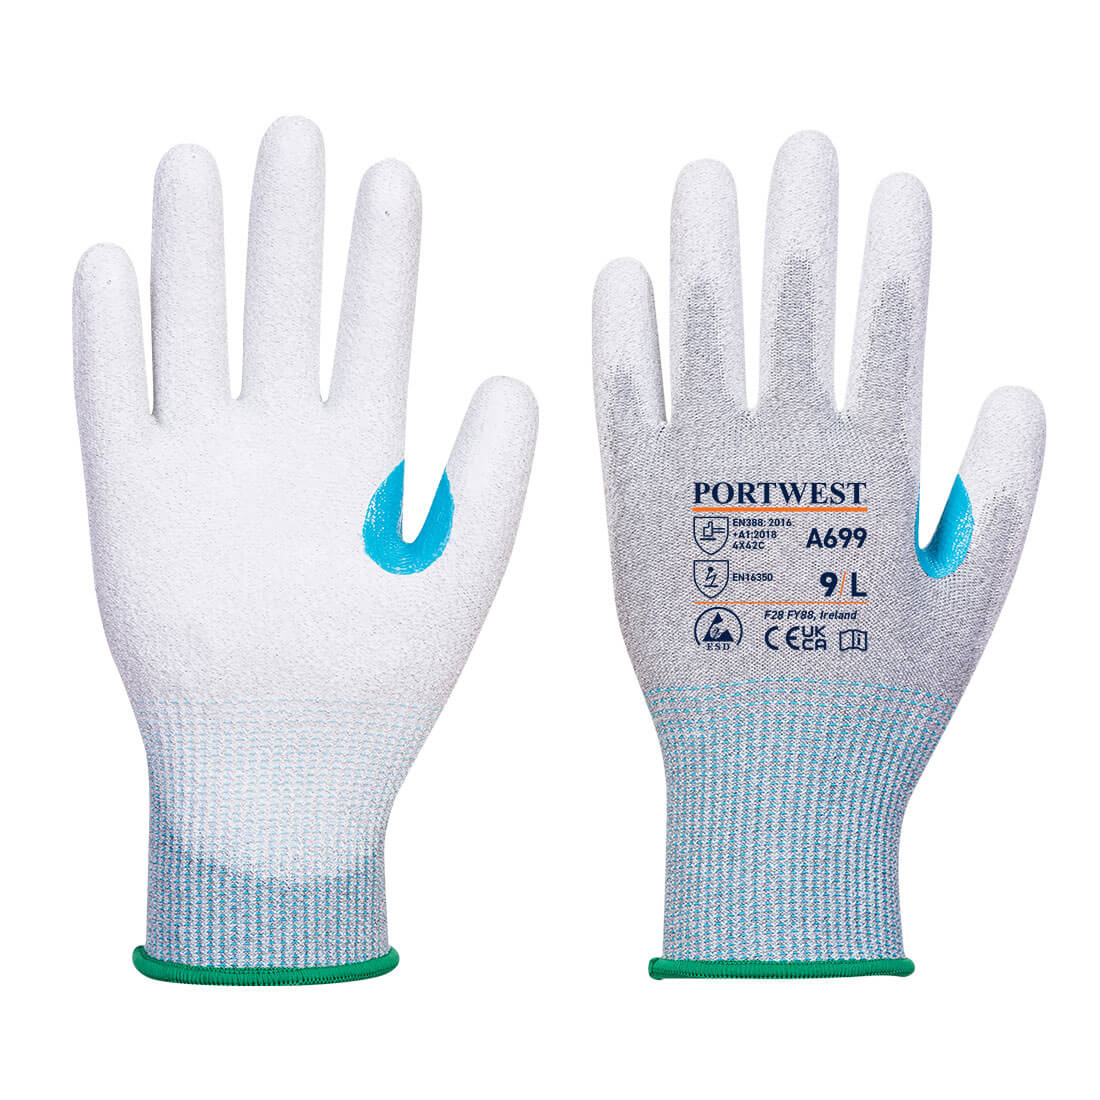 MR13 ESD PU Palm Glove - 12 pack - Grey/White